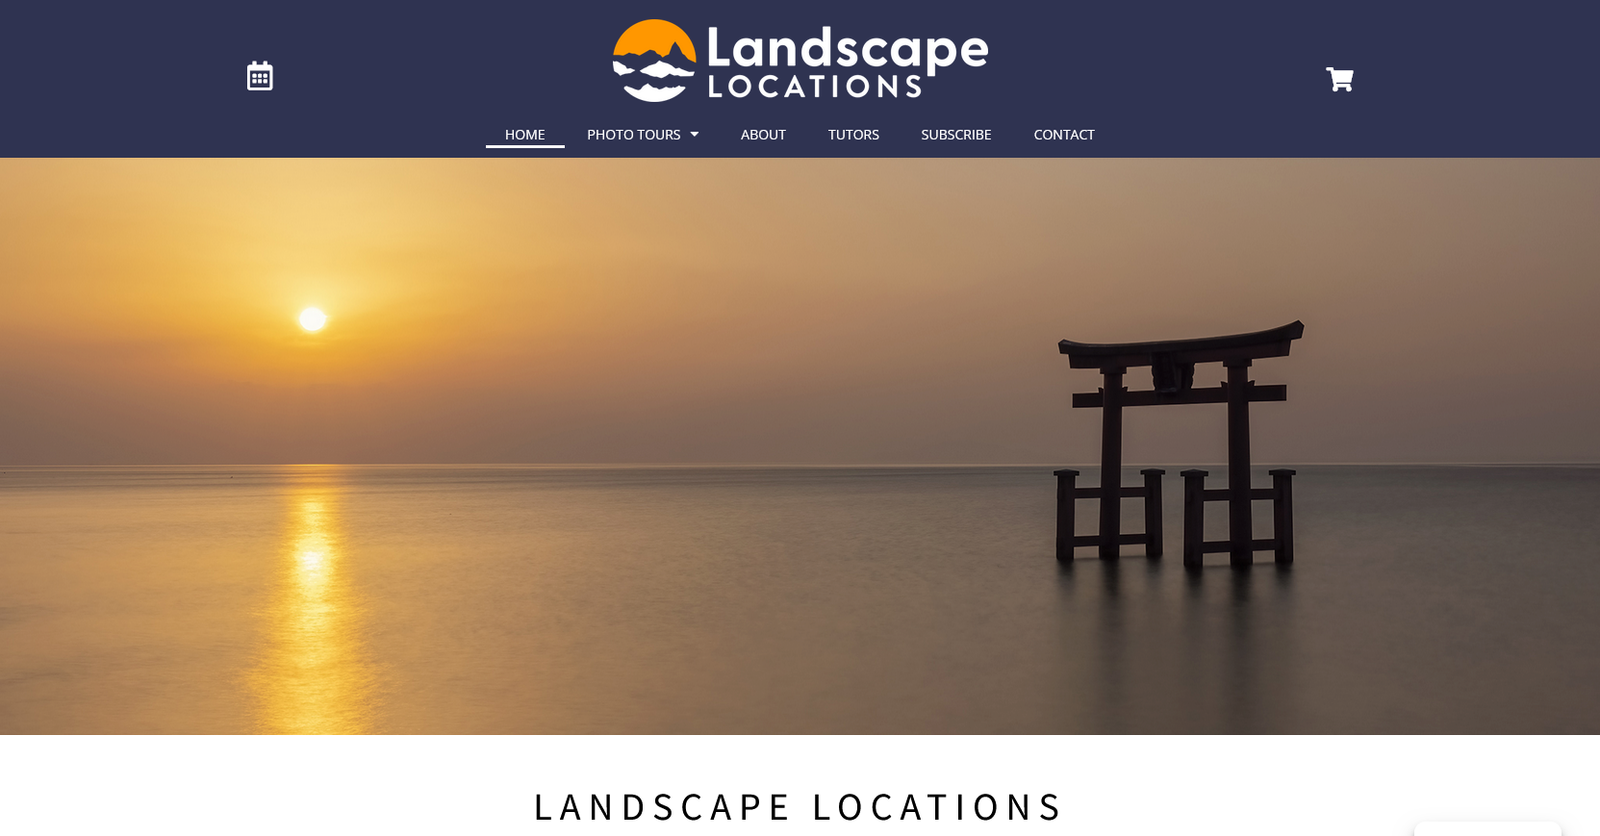 Landscape Locations website